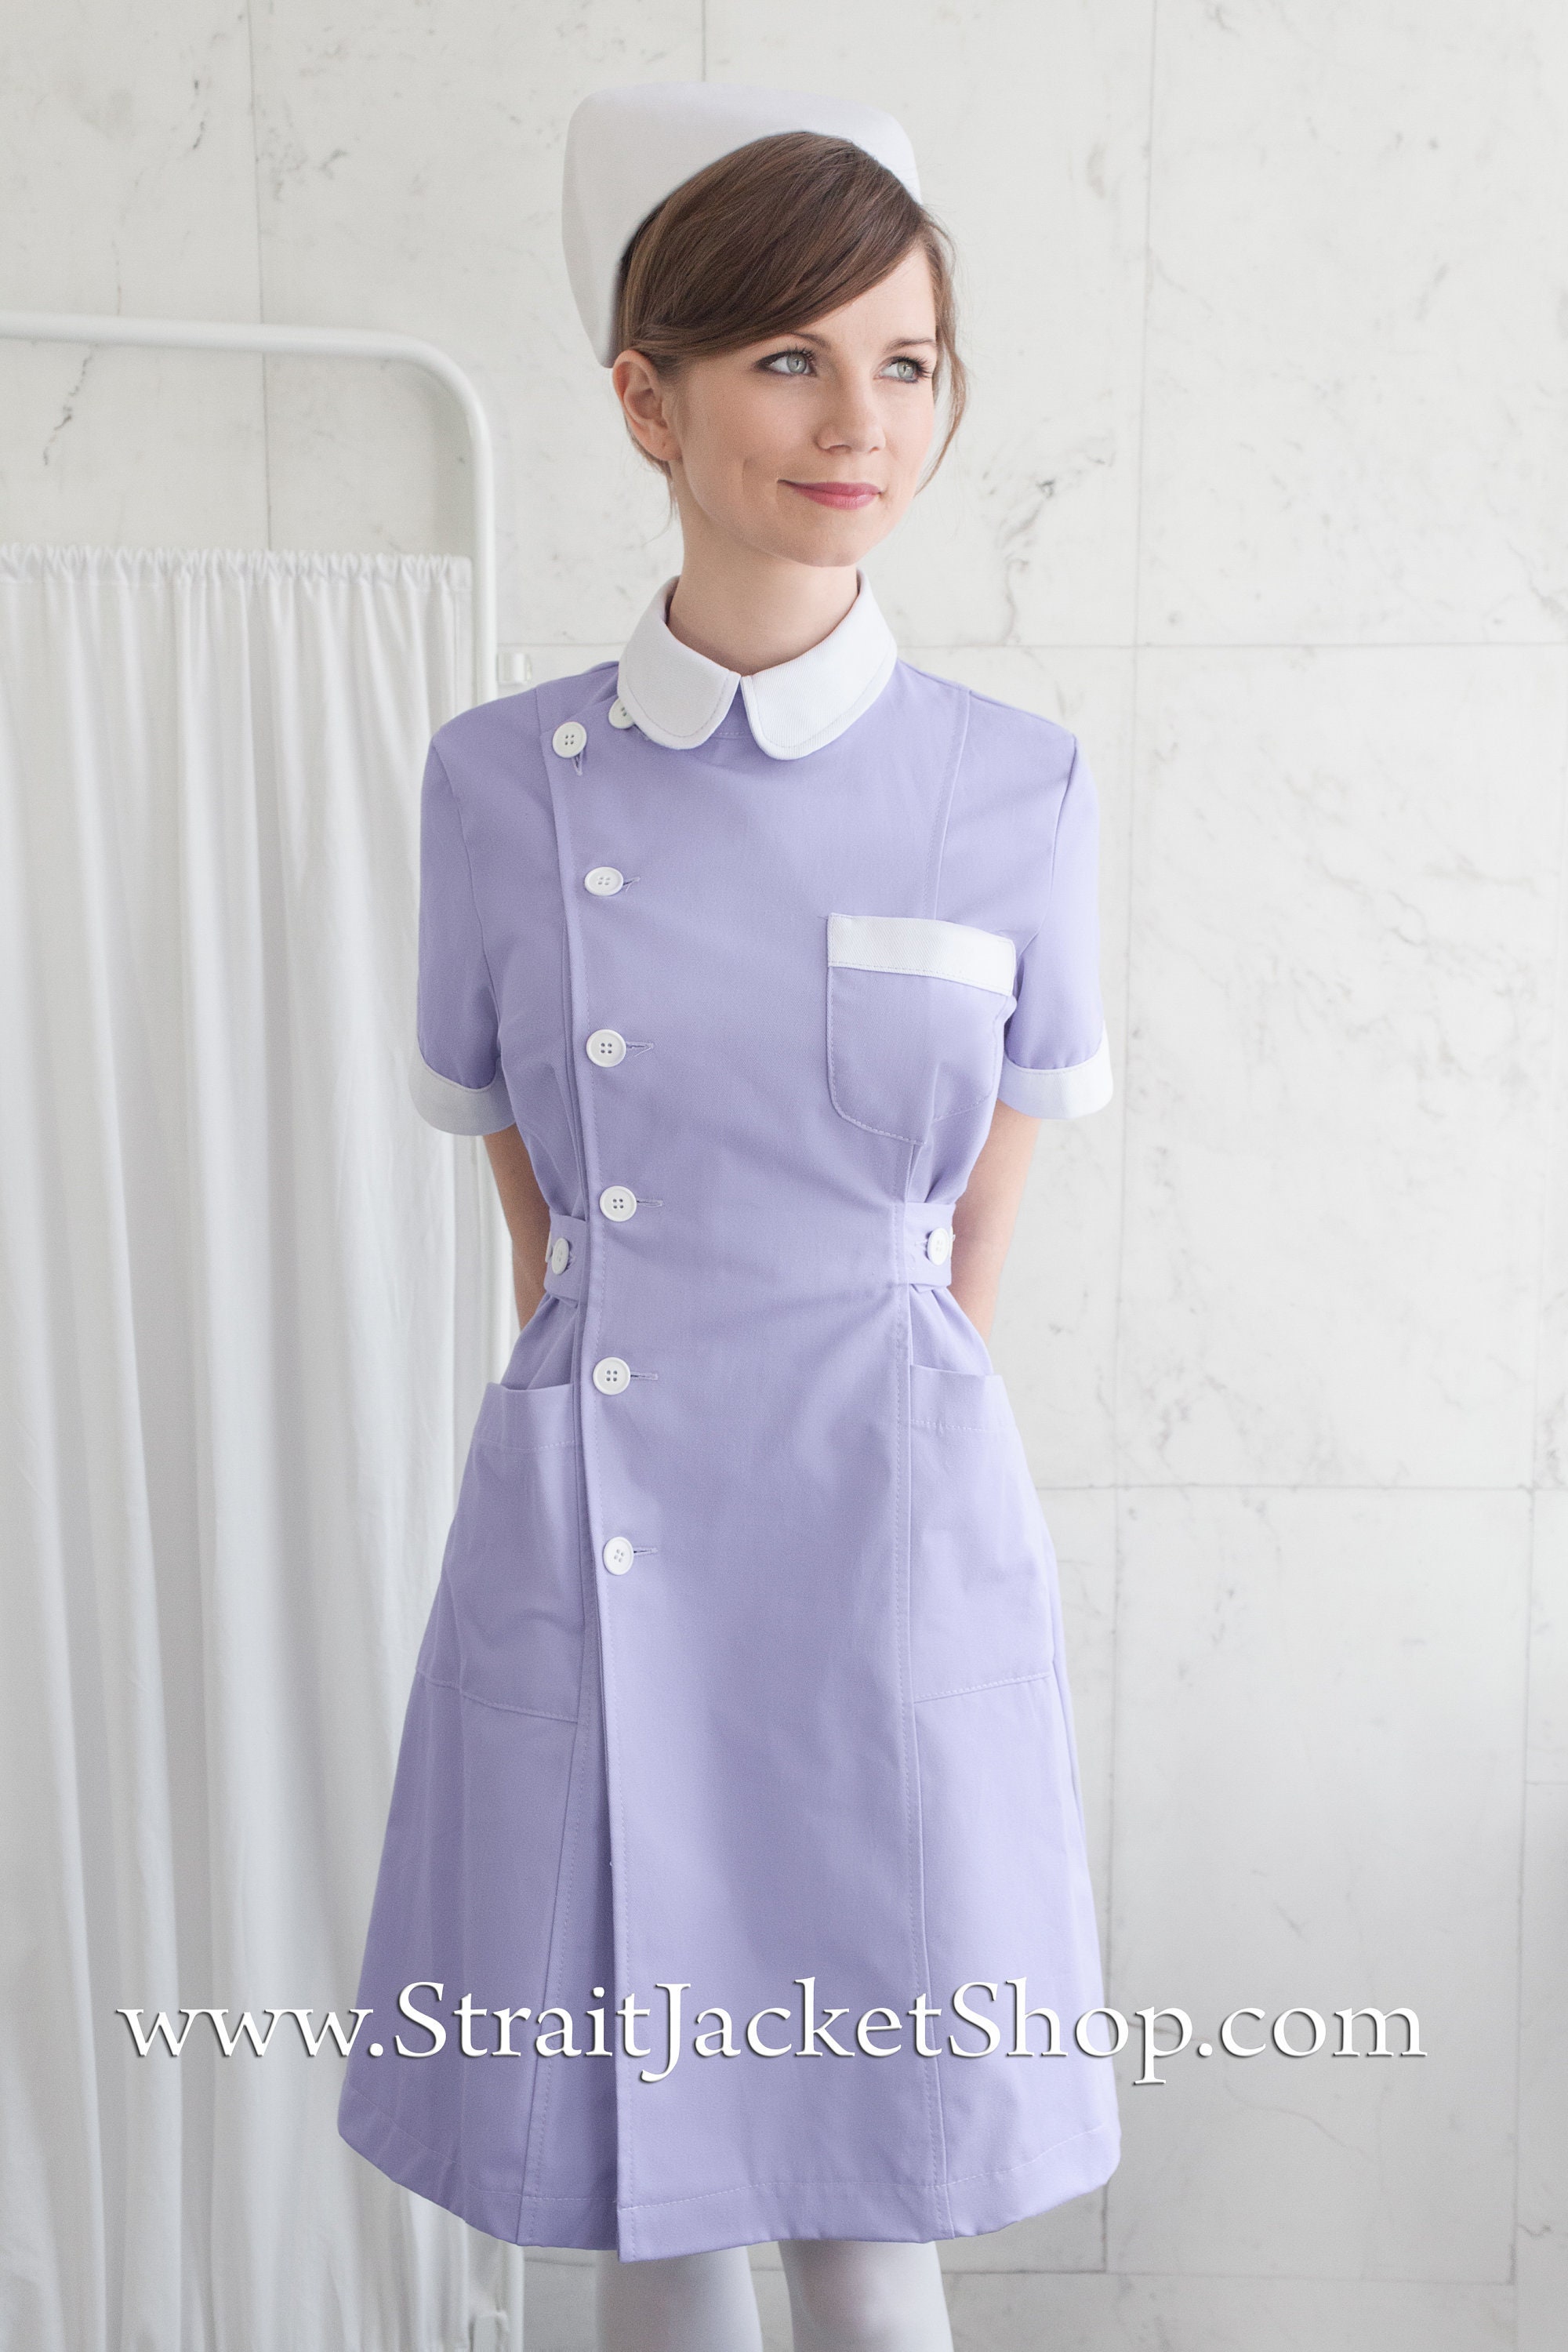 Cute Purple Nurse Uniform High Quality 100% Cotton / ABDL Nurse / Scrubs /  Nurse Dress With Short Sleeves Nurse Cap 